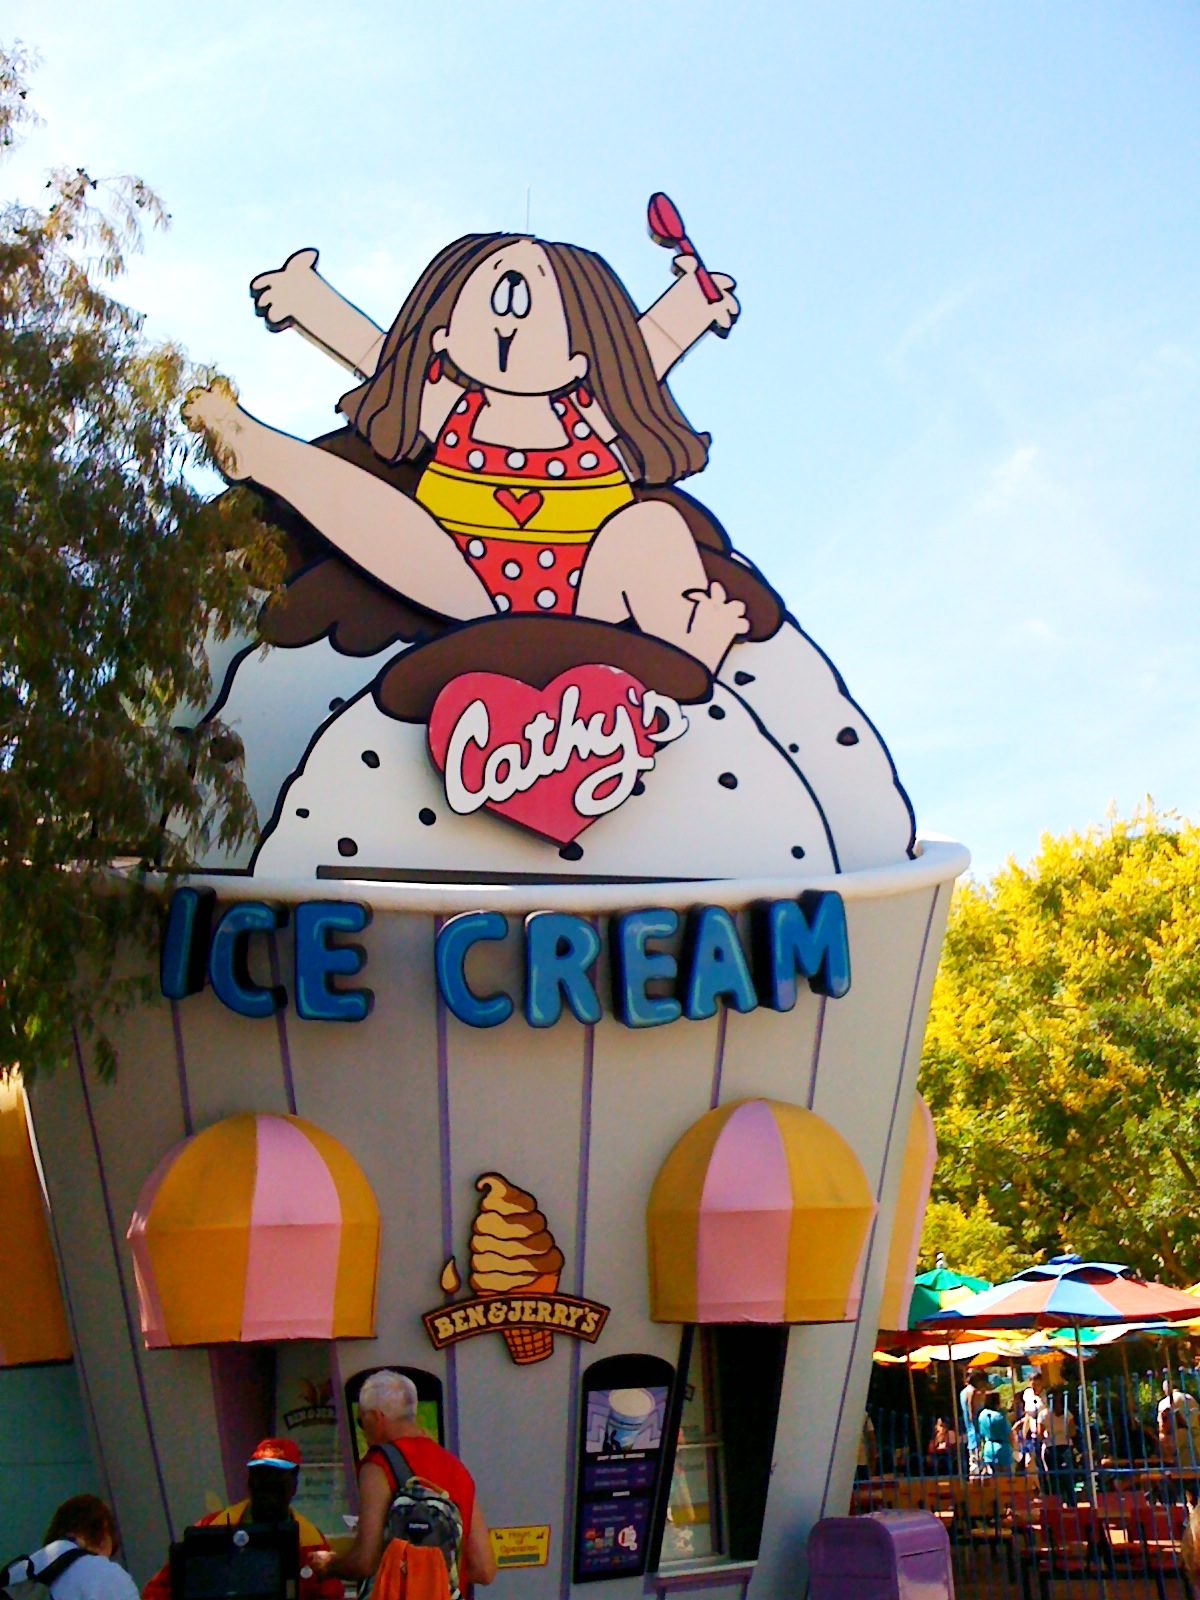 Cathy's Ice Cream sign &amp; building